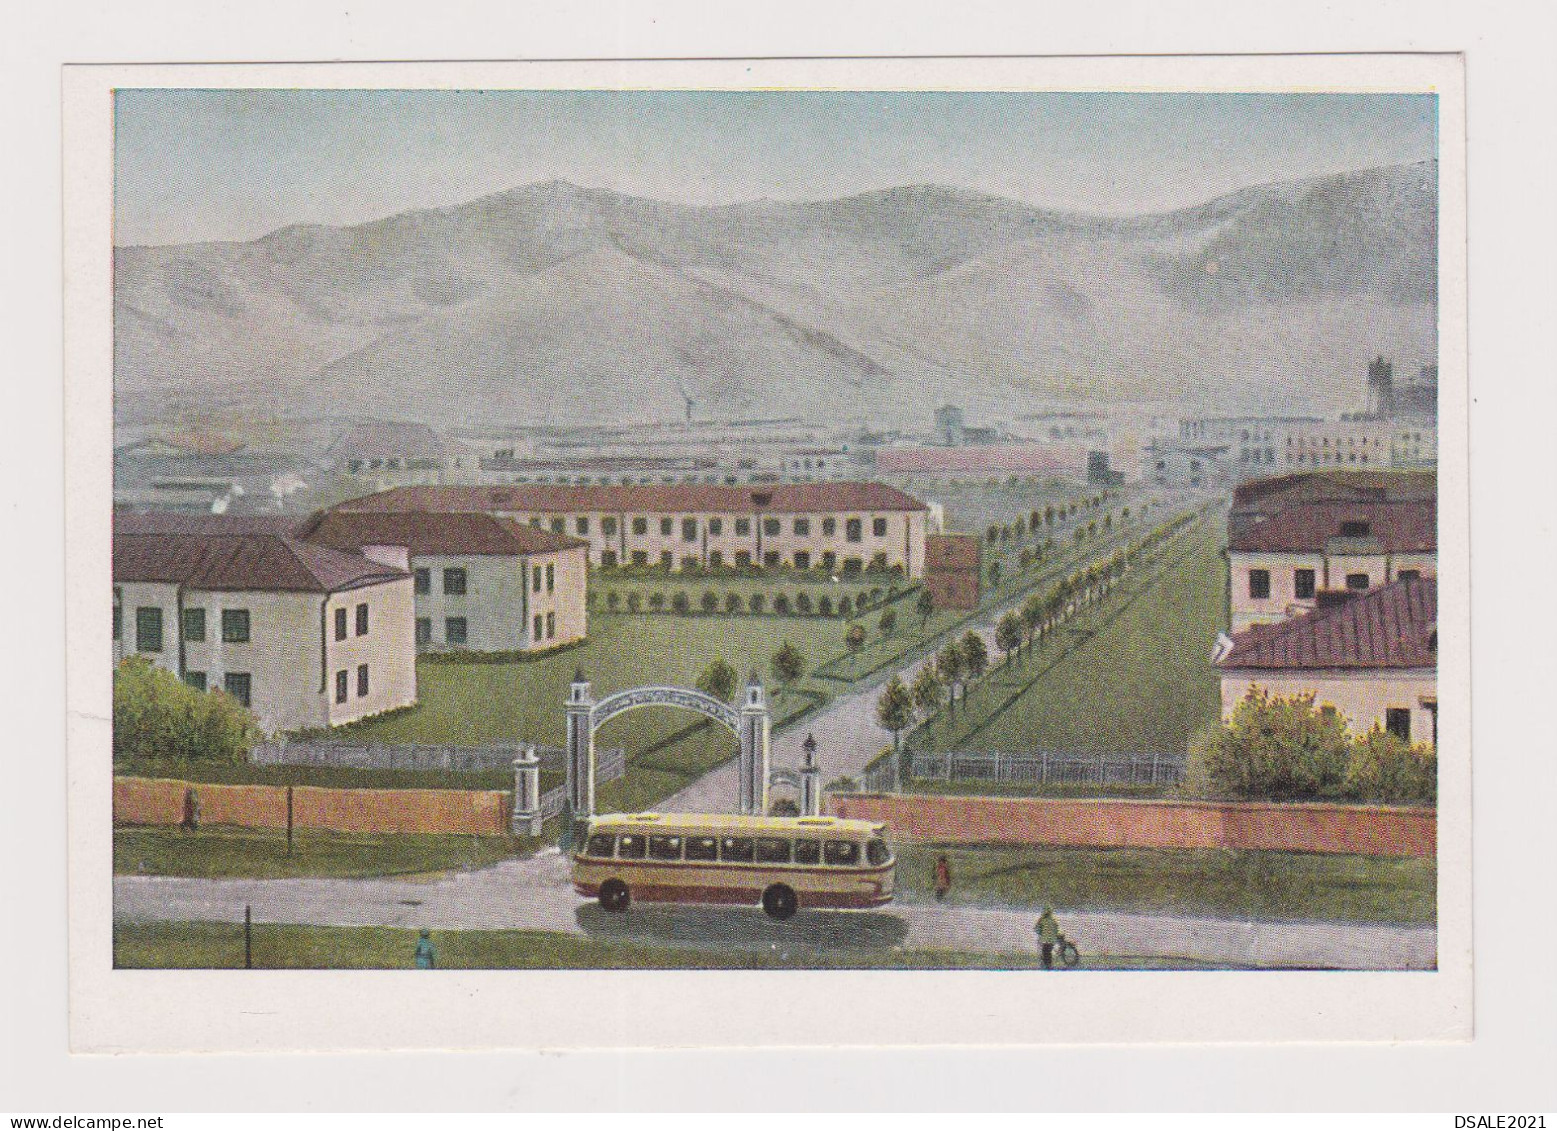 Mongolia Mongolei Mongolie Ulaanbaatar Industrial General Enterprise Vintage 1960s Soviet USSR Photo Postcard (66635) - Mongolei